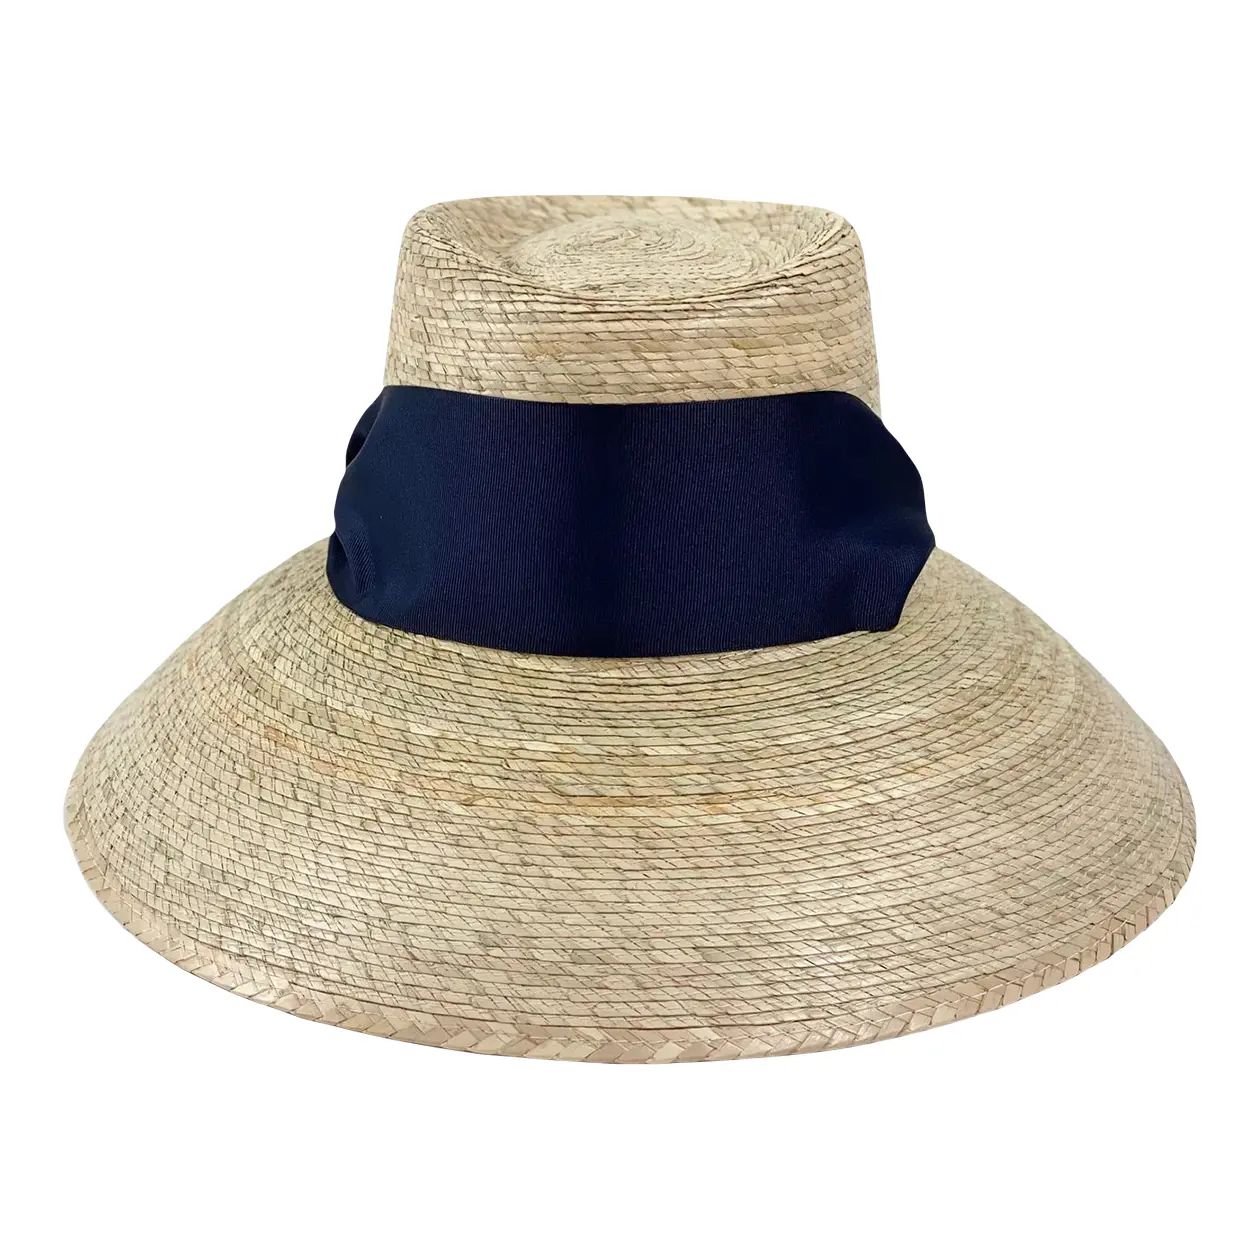 Wildflower Sun Hat with Navy Grosgrain Ribbon | Chairish